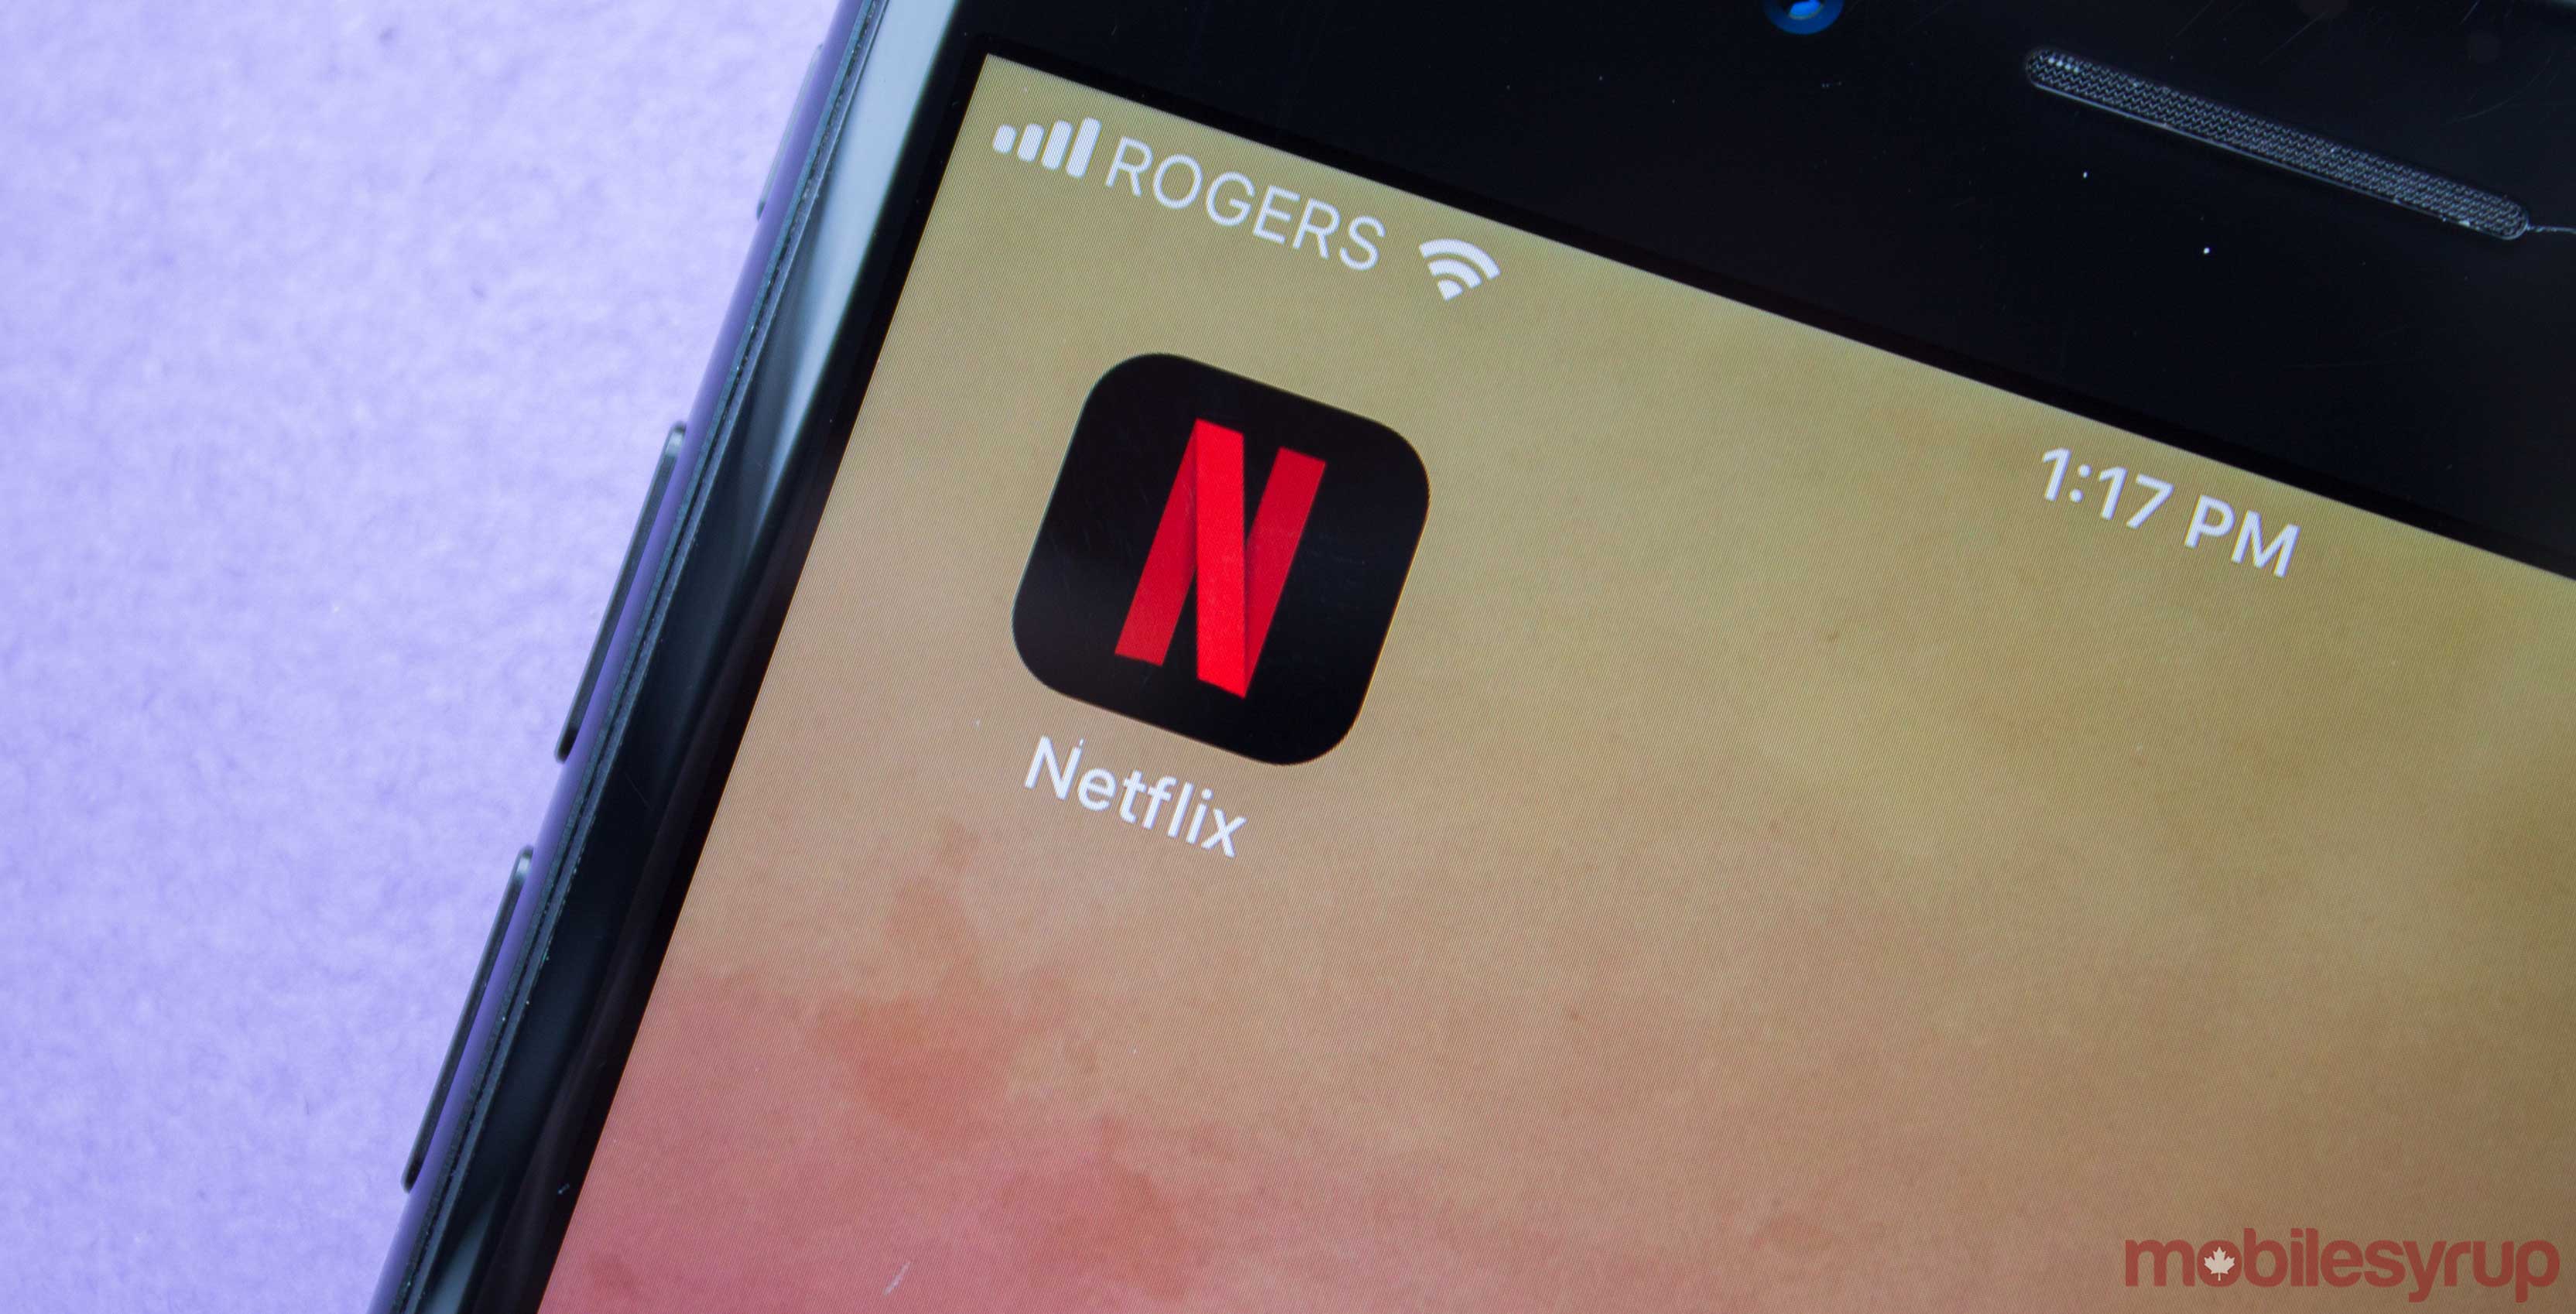 Netflix app on phone